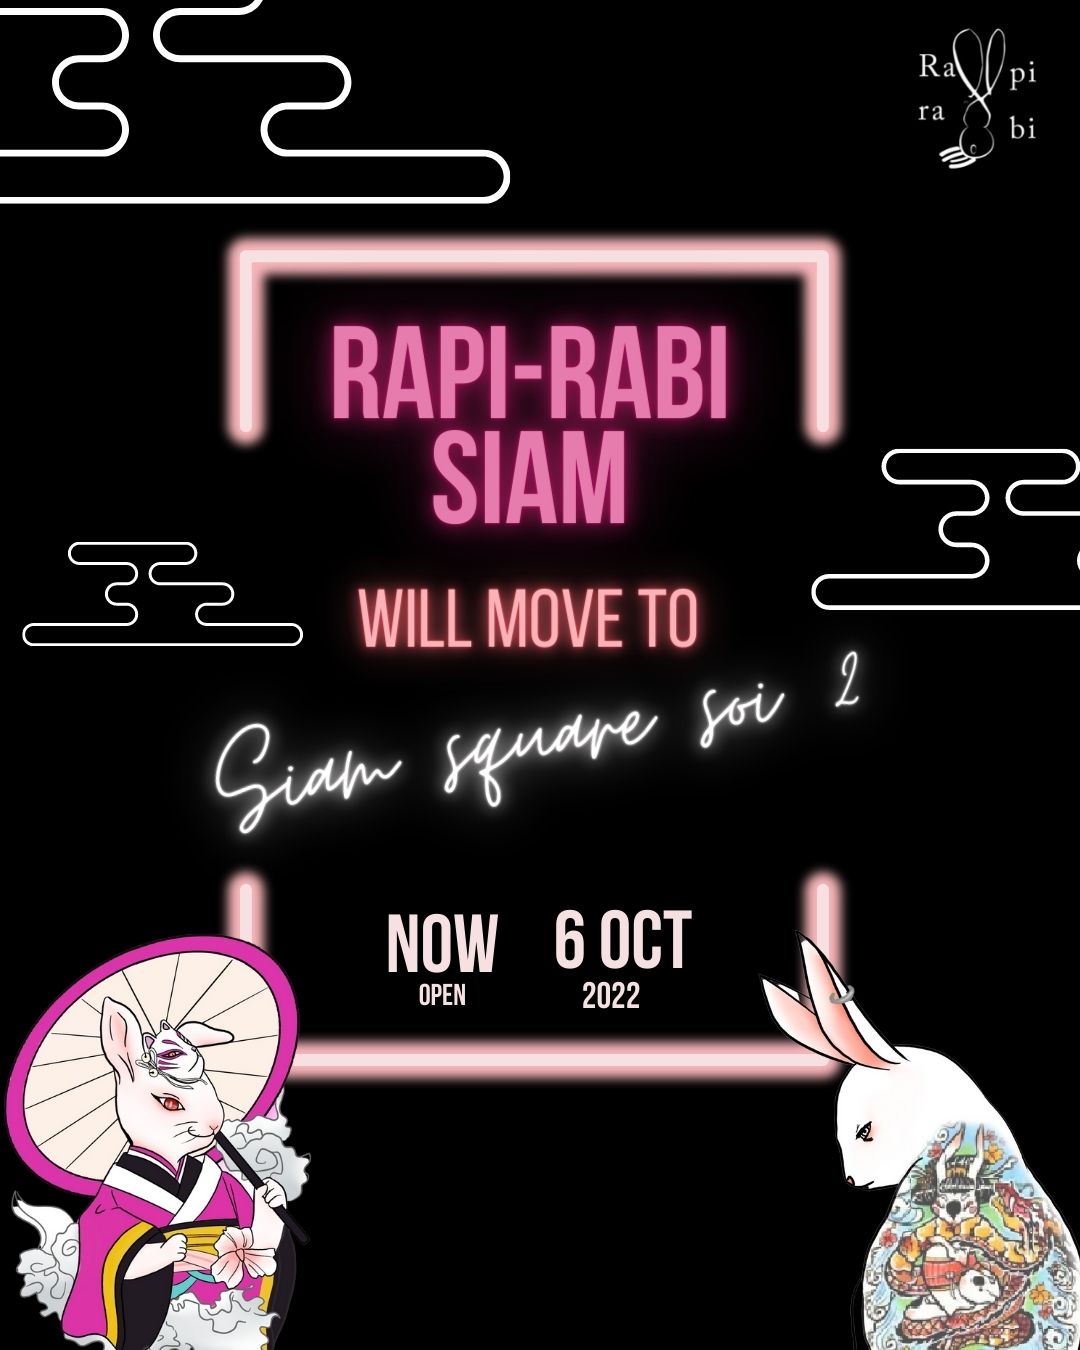 (TH) Rapi-rabi สยาม 🐇 ย้ายสถานที่ใหม่!!! By Rapi-rabi